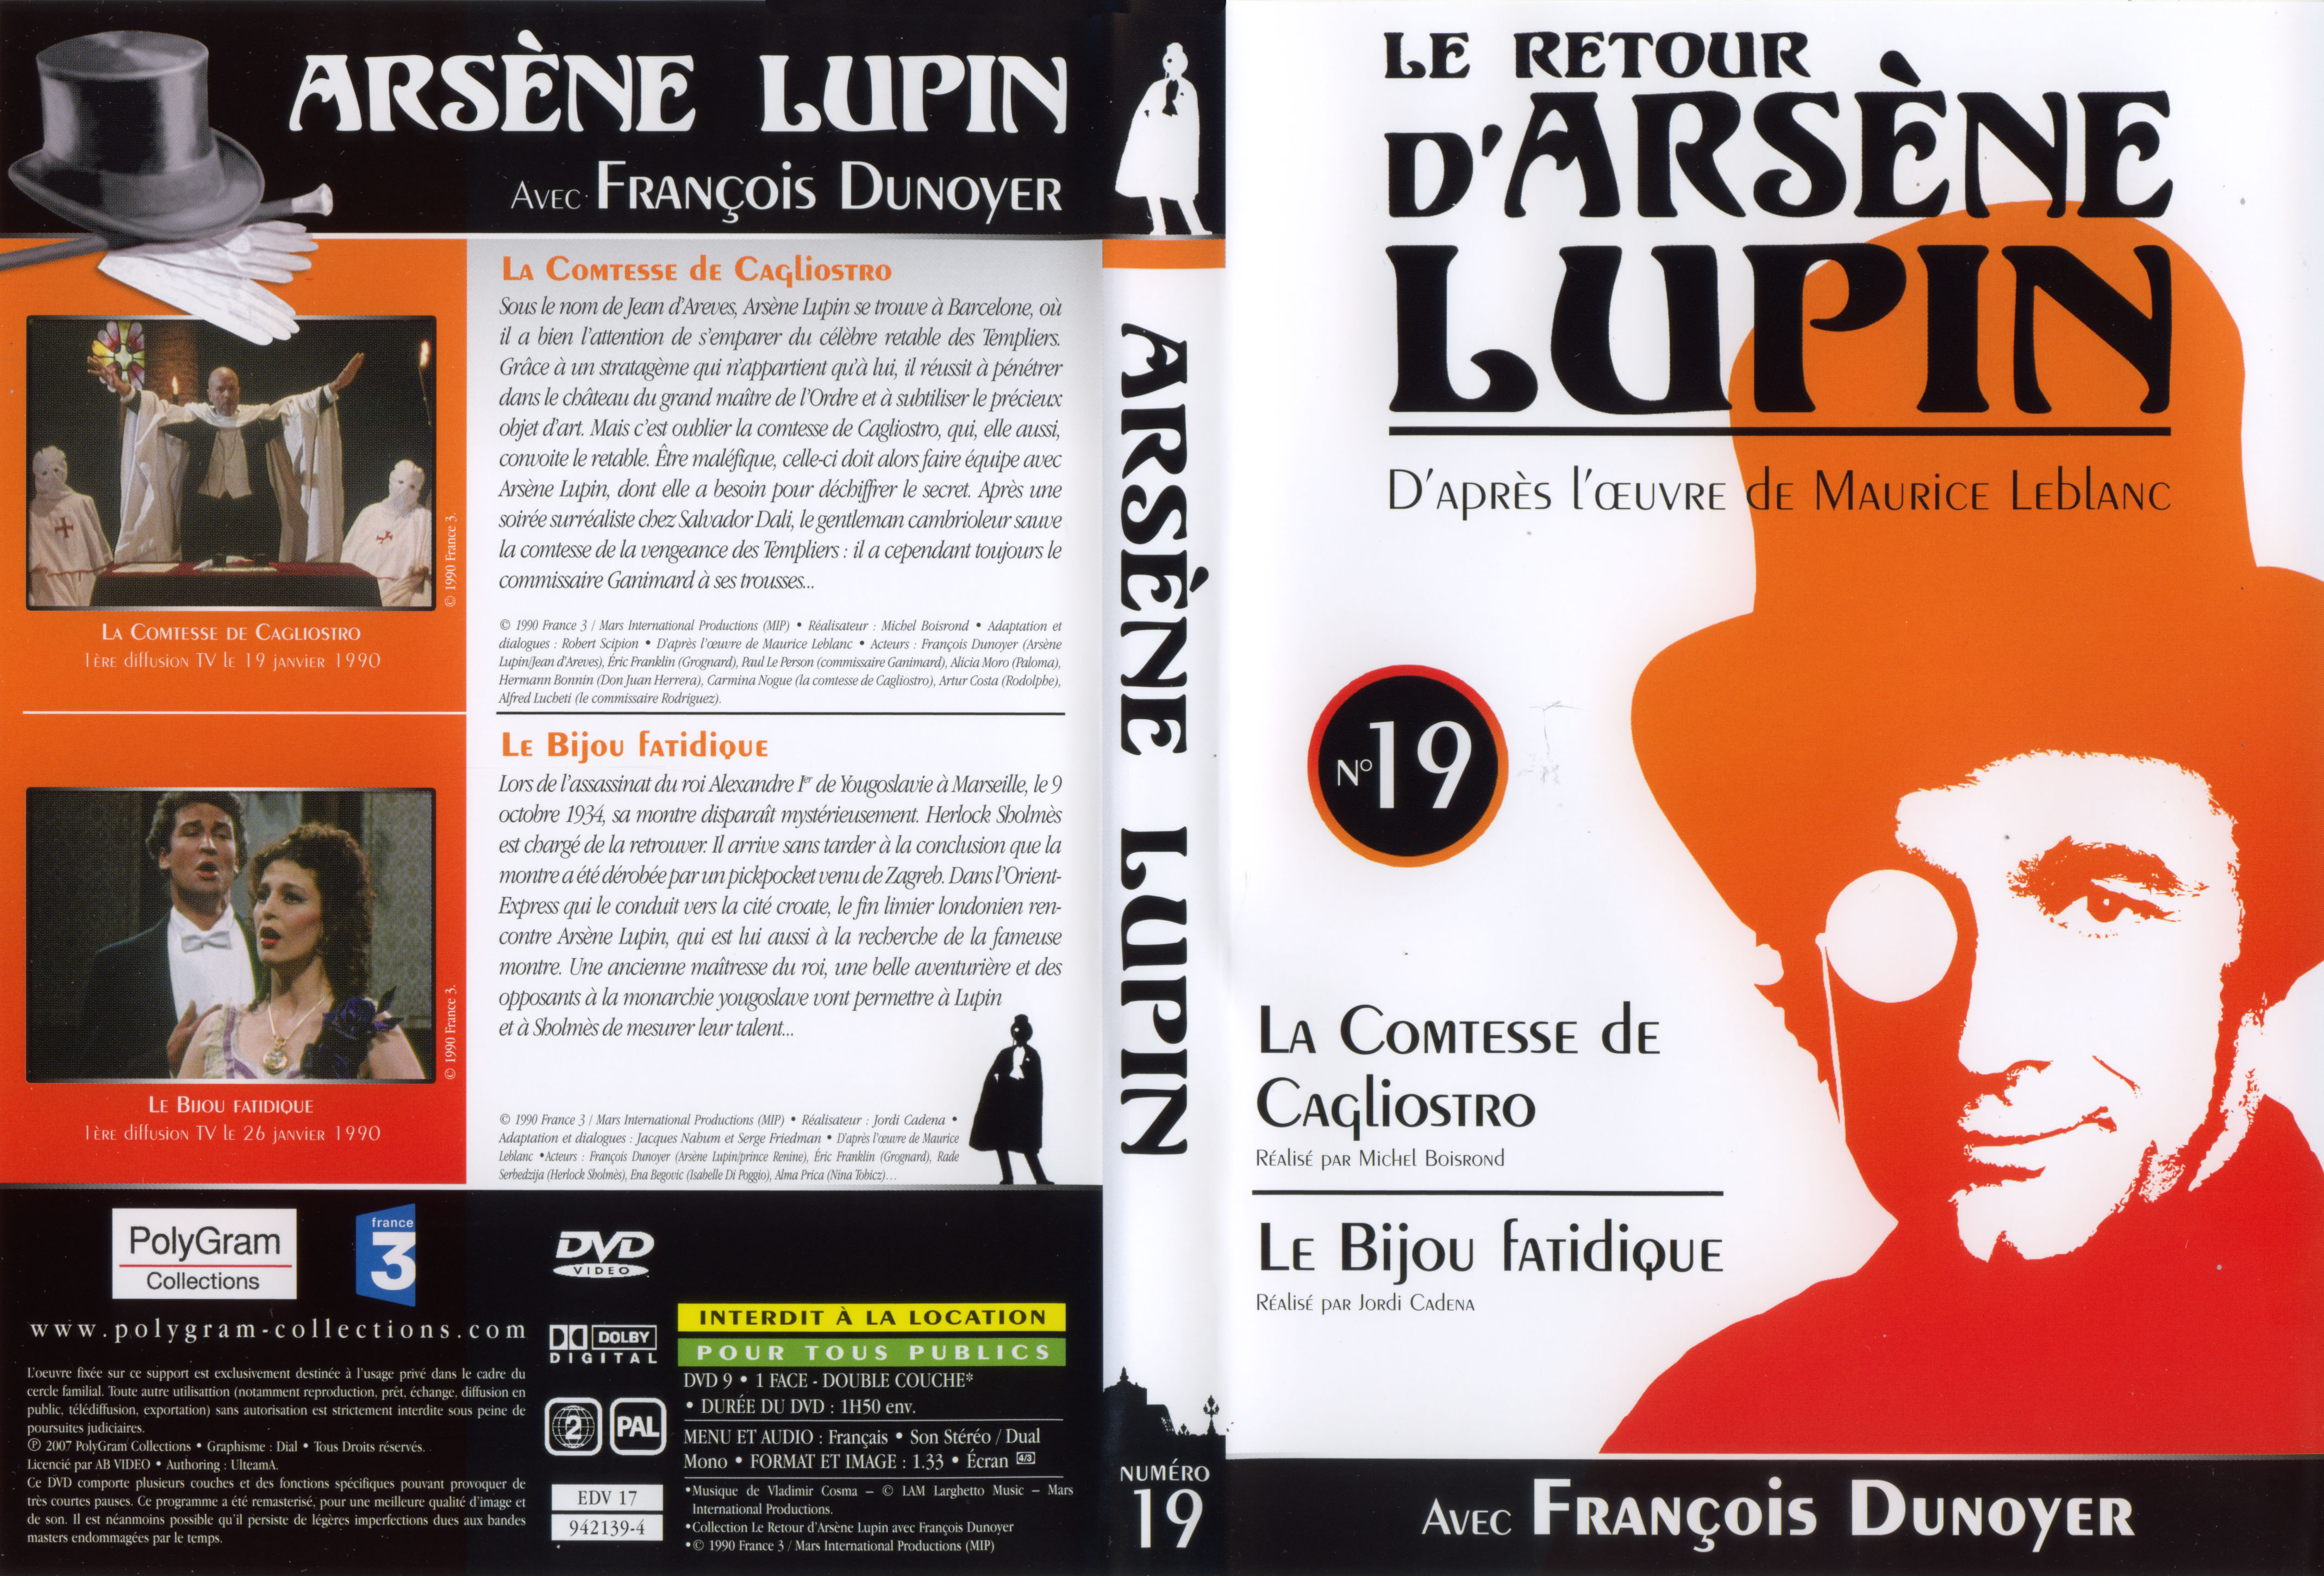 Jaquette DVD Arsene Lupin DVD 19